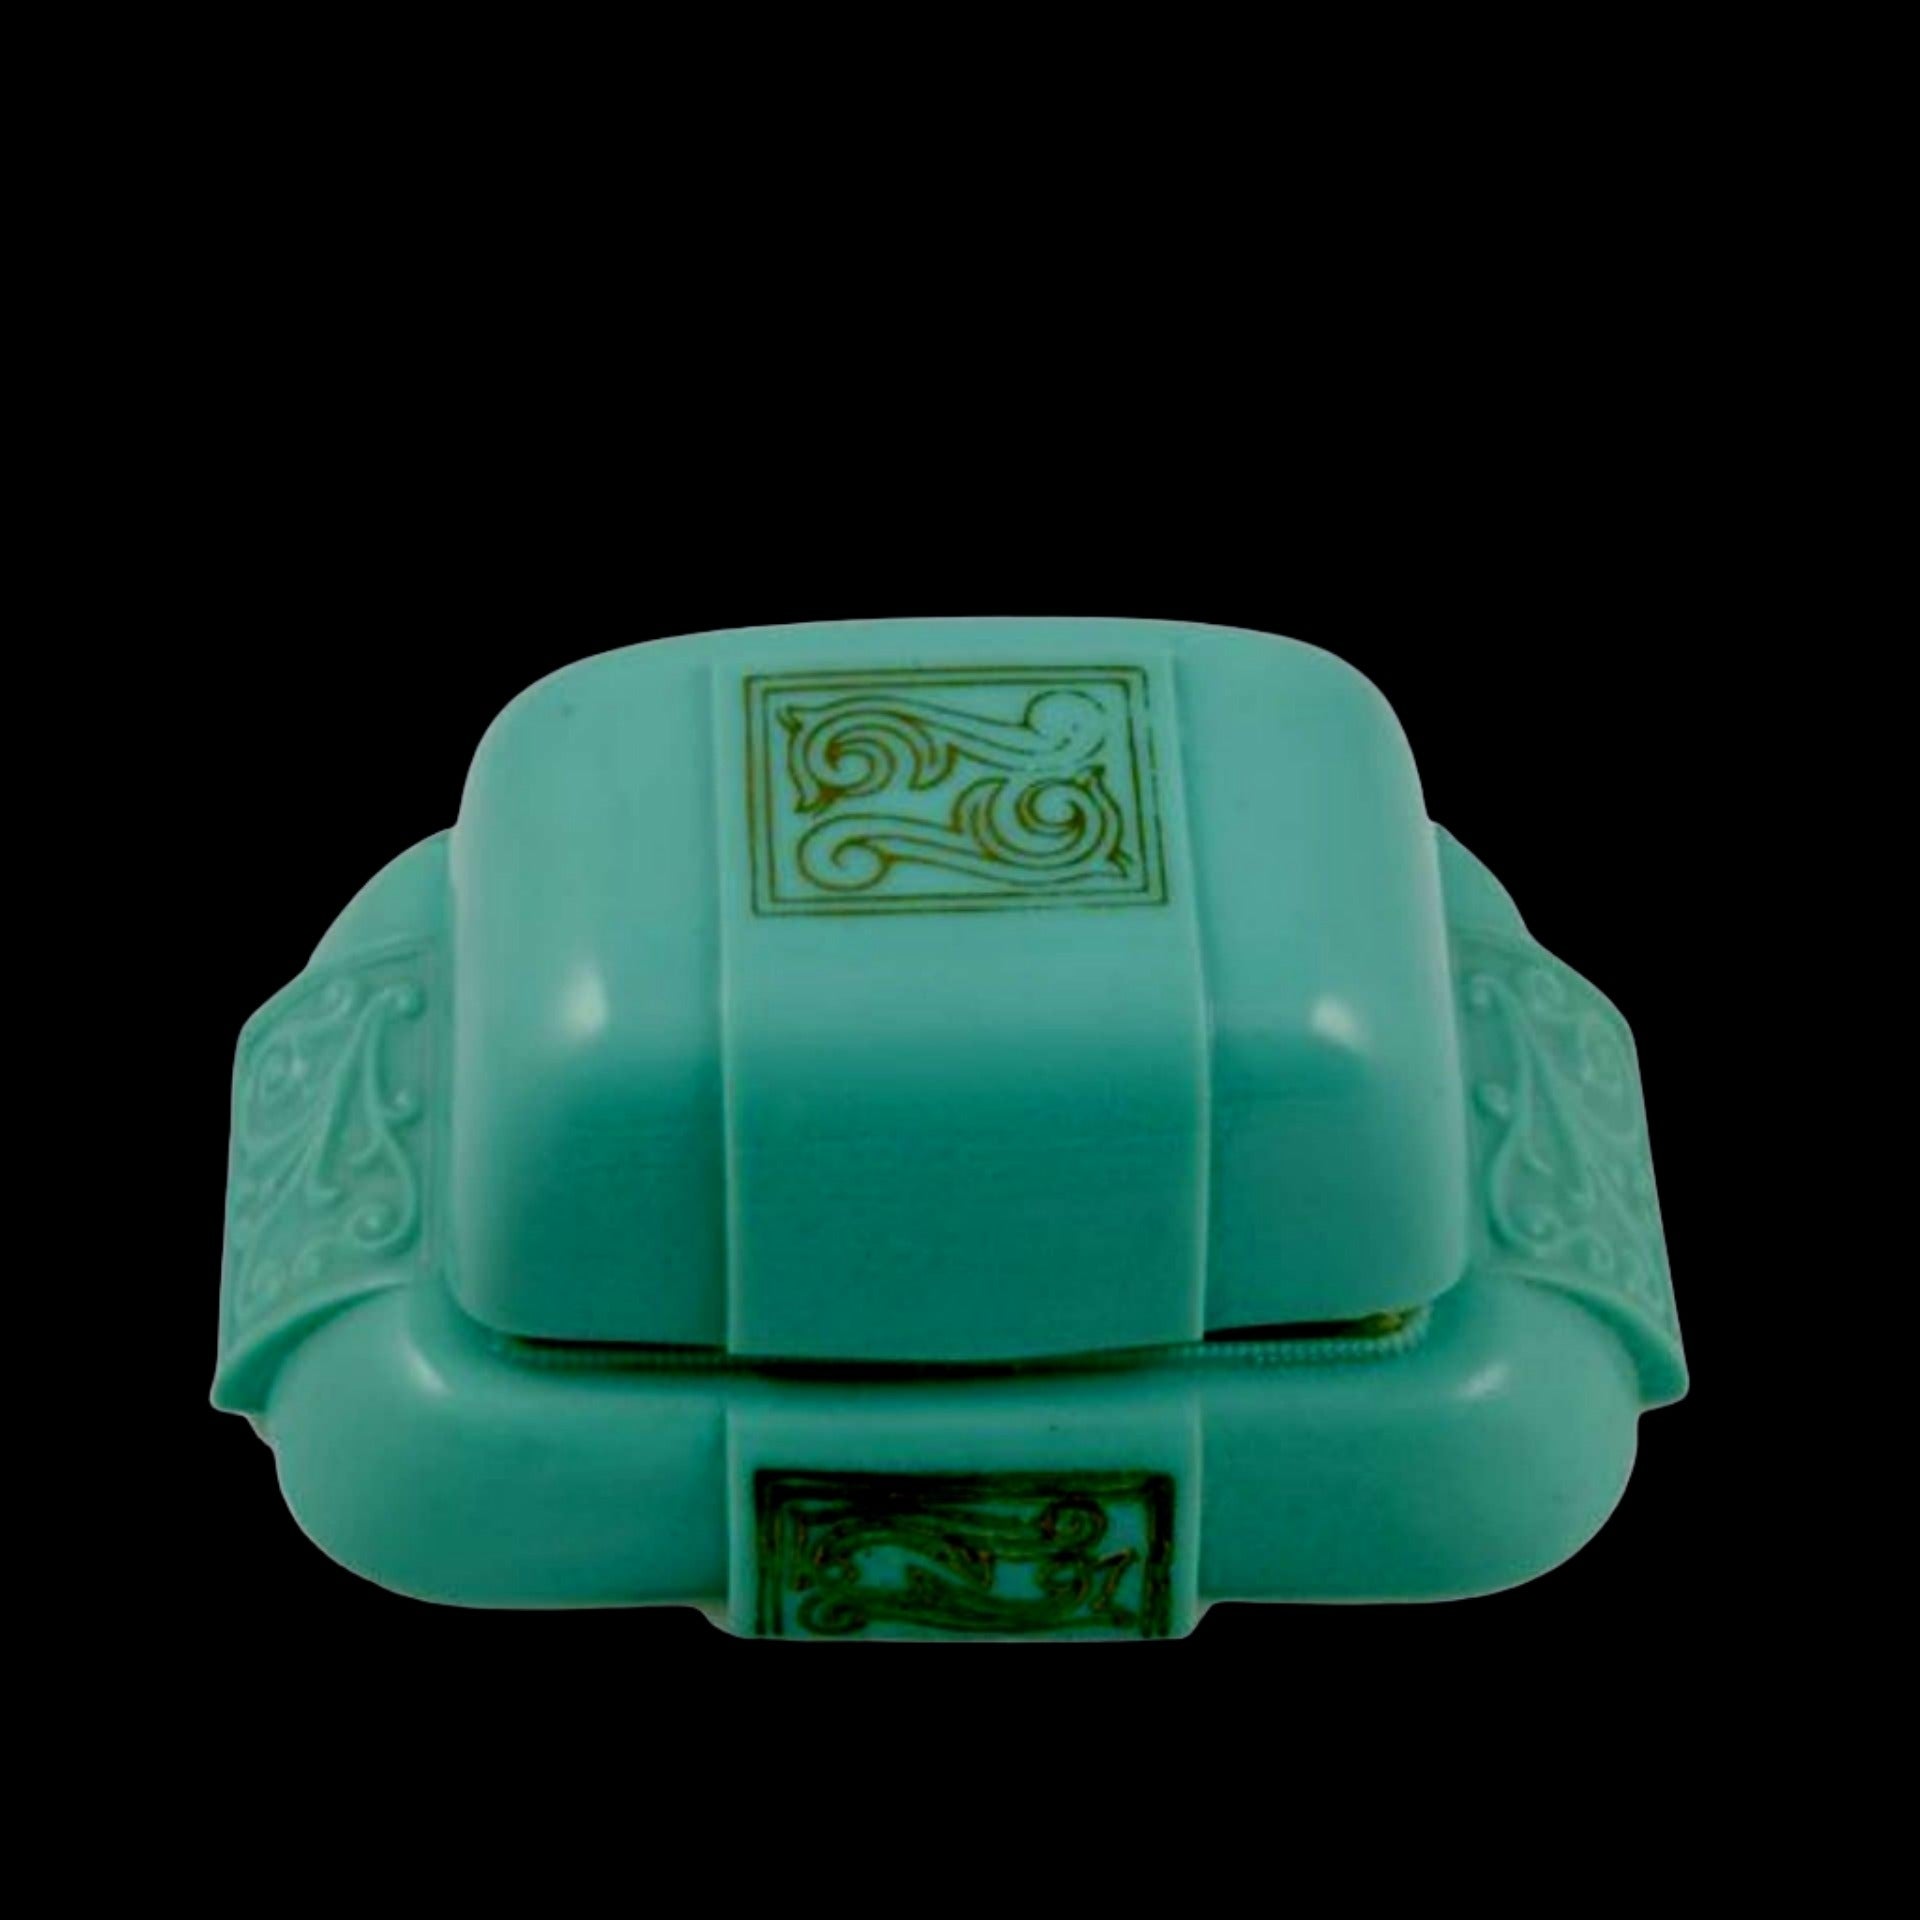 Art Deco Jewelry - Aqua Green Colored Vintage Ring Box